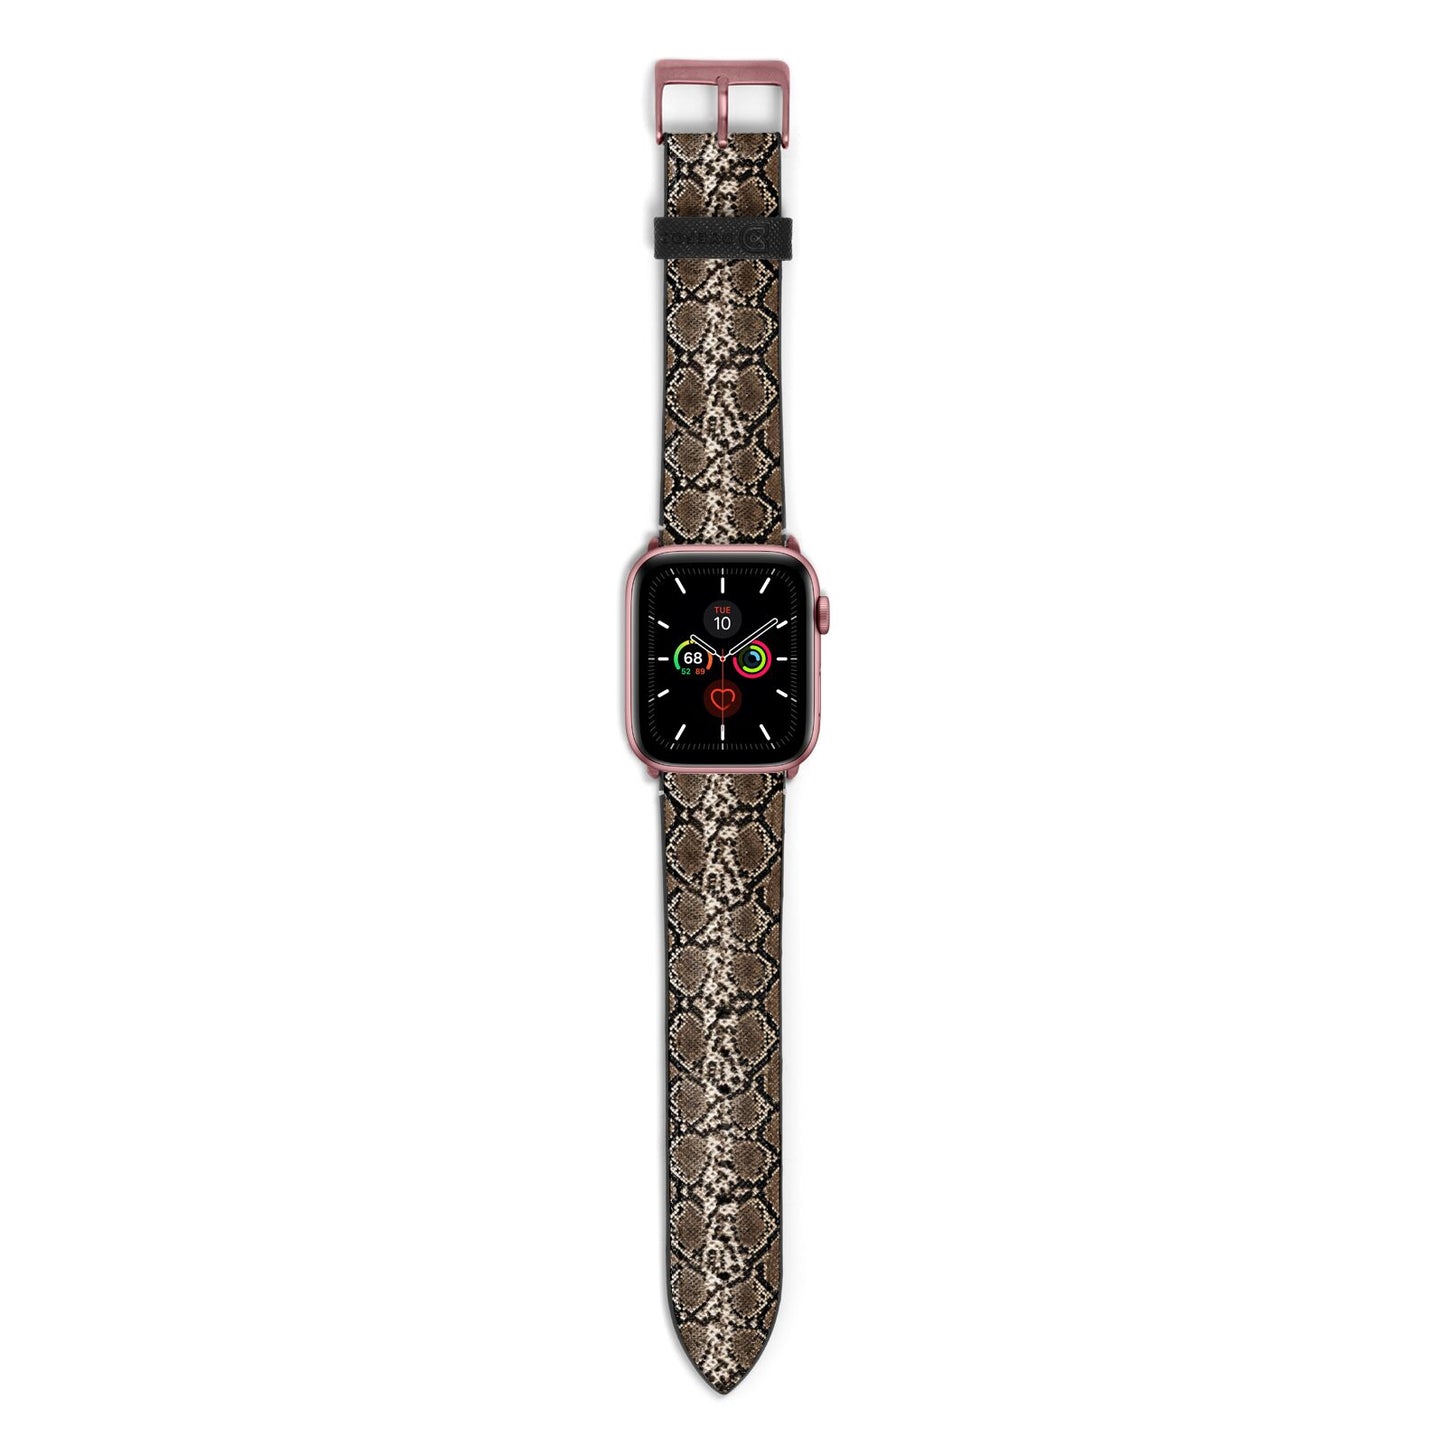 Snakeskin Pattern Apple Watch Strap with Rose Gold Hardware